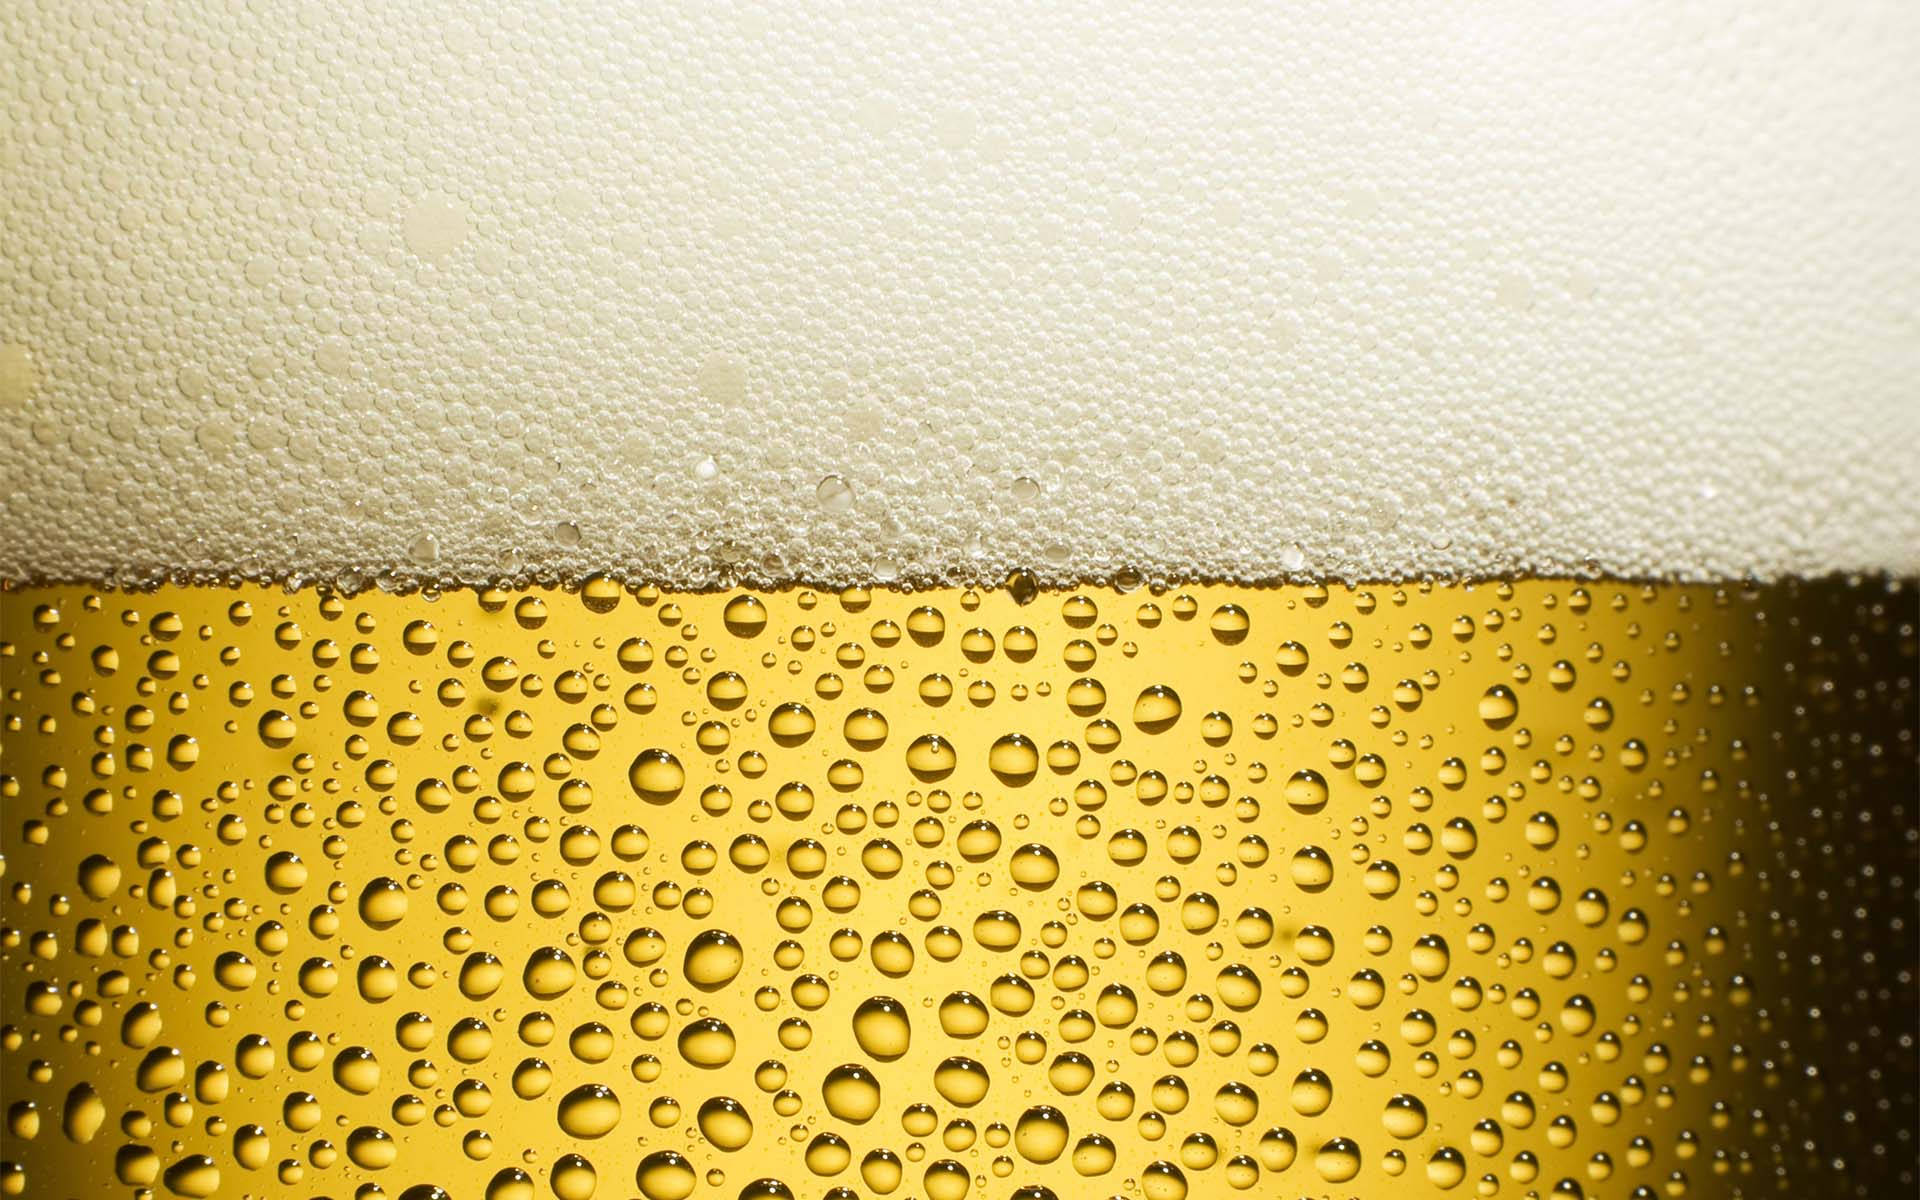 Yellow Hd Beer Bubbles Wallpaper